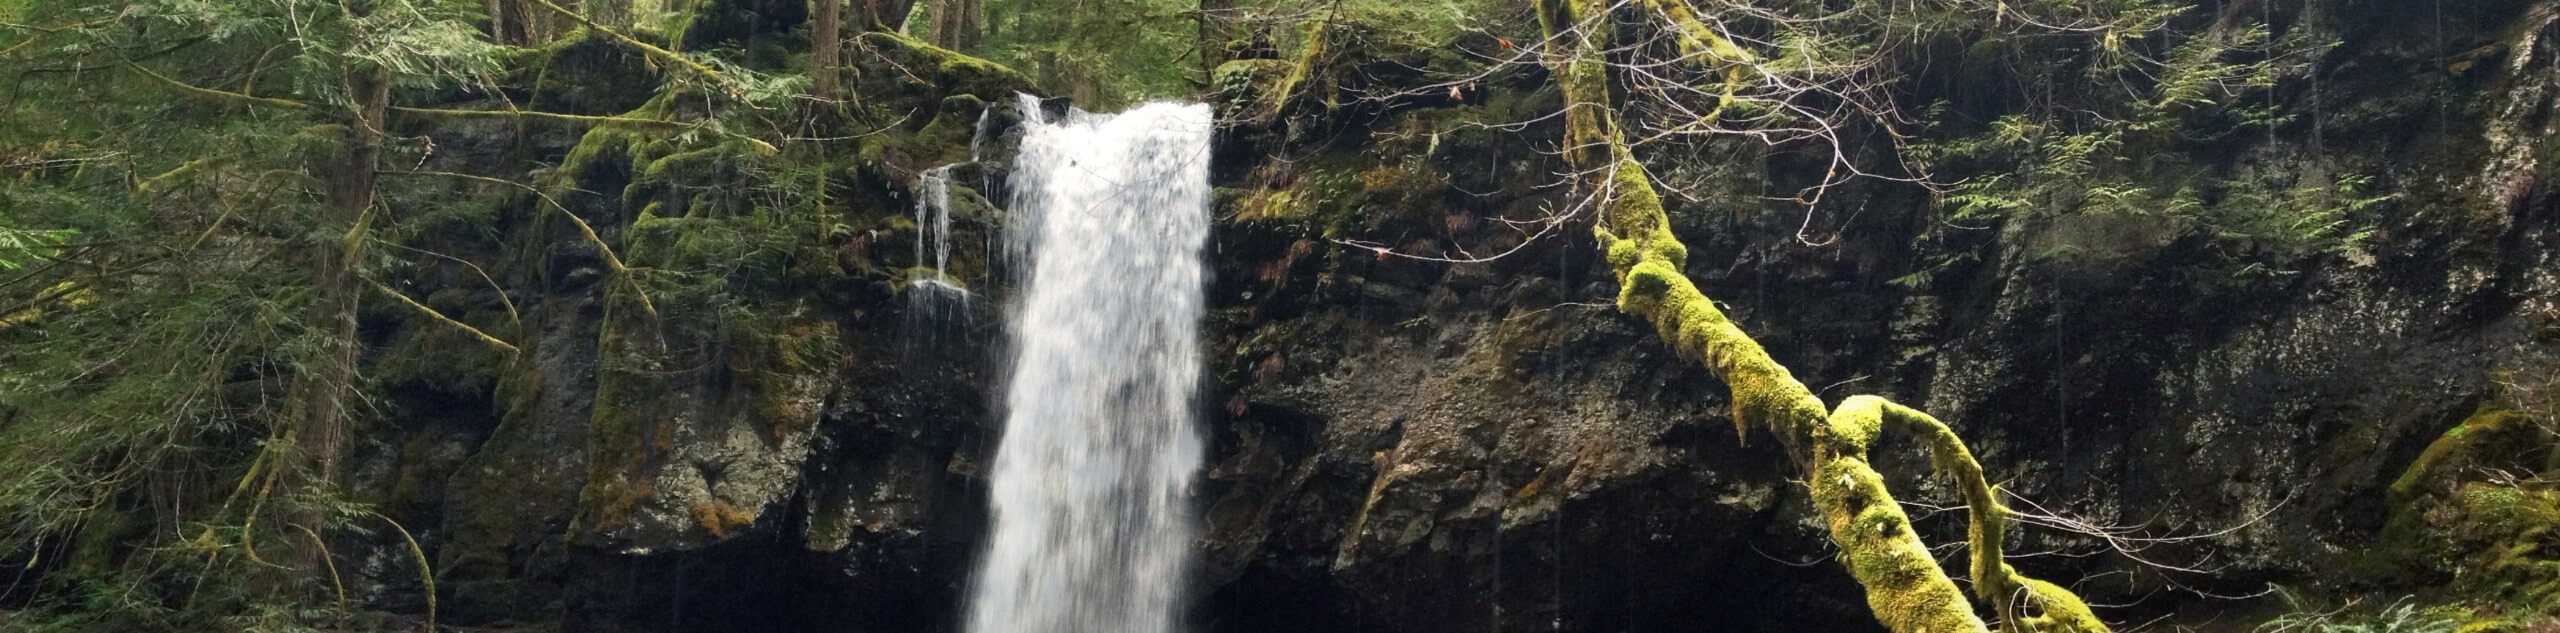 Trestle Creek Falls Loop Hike